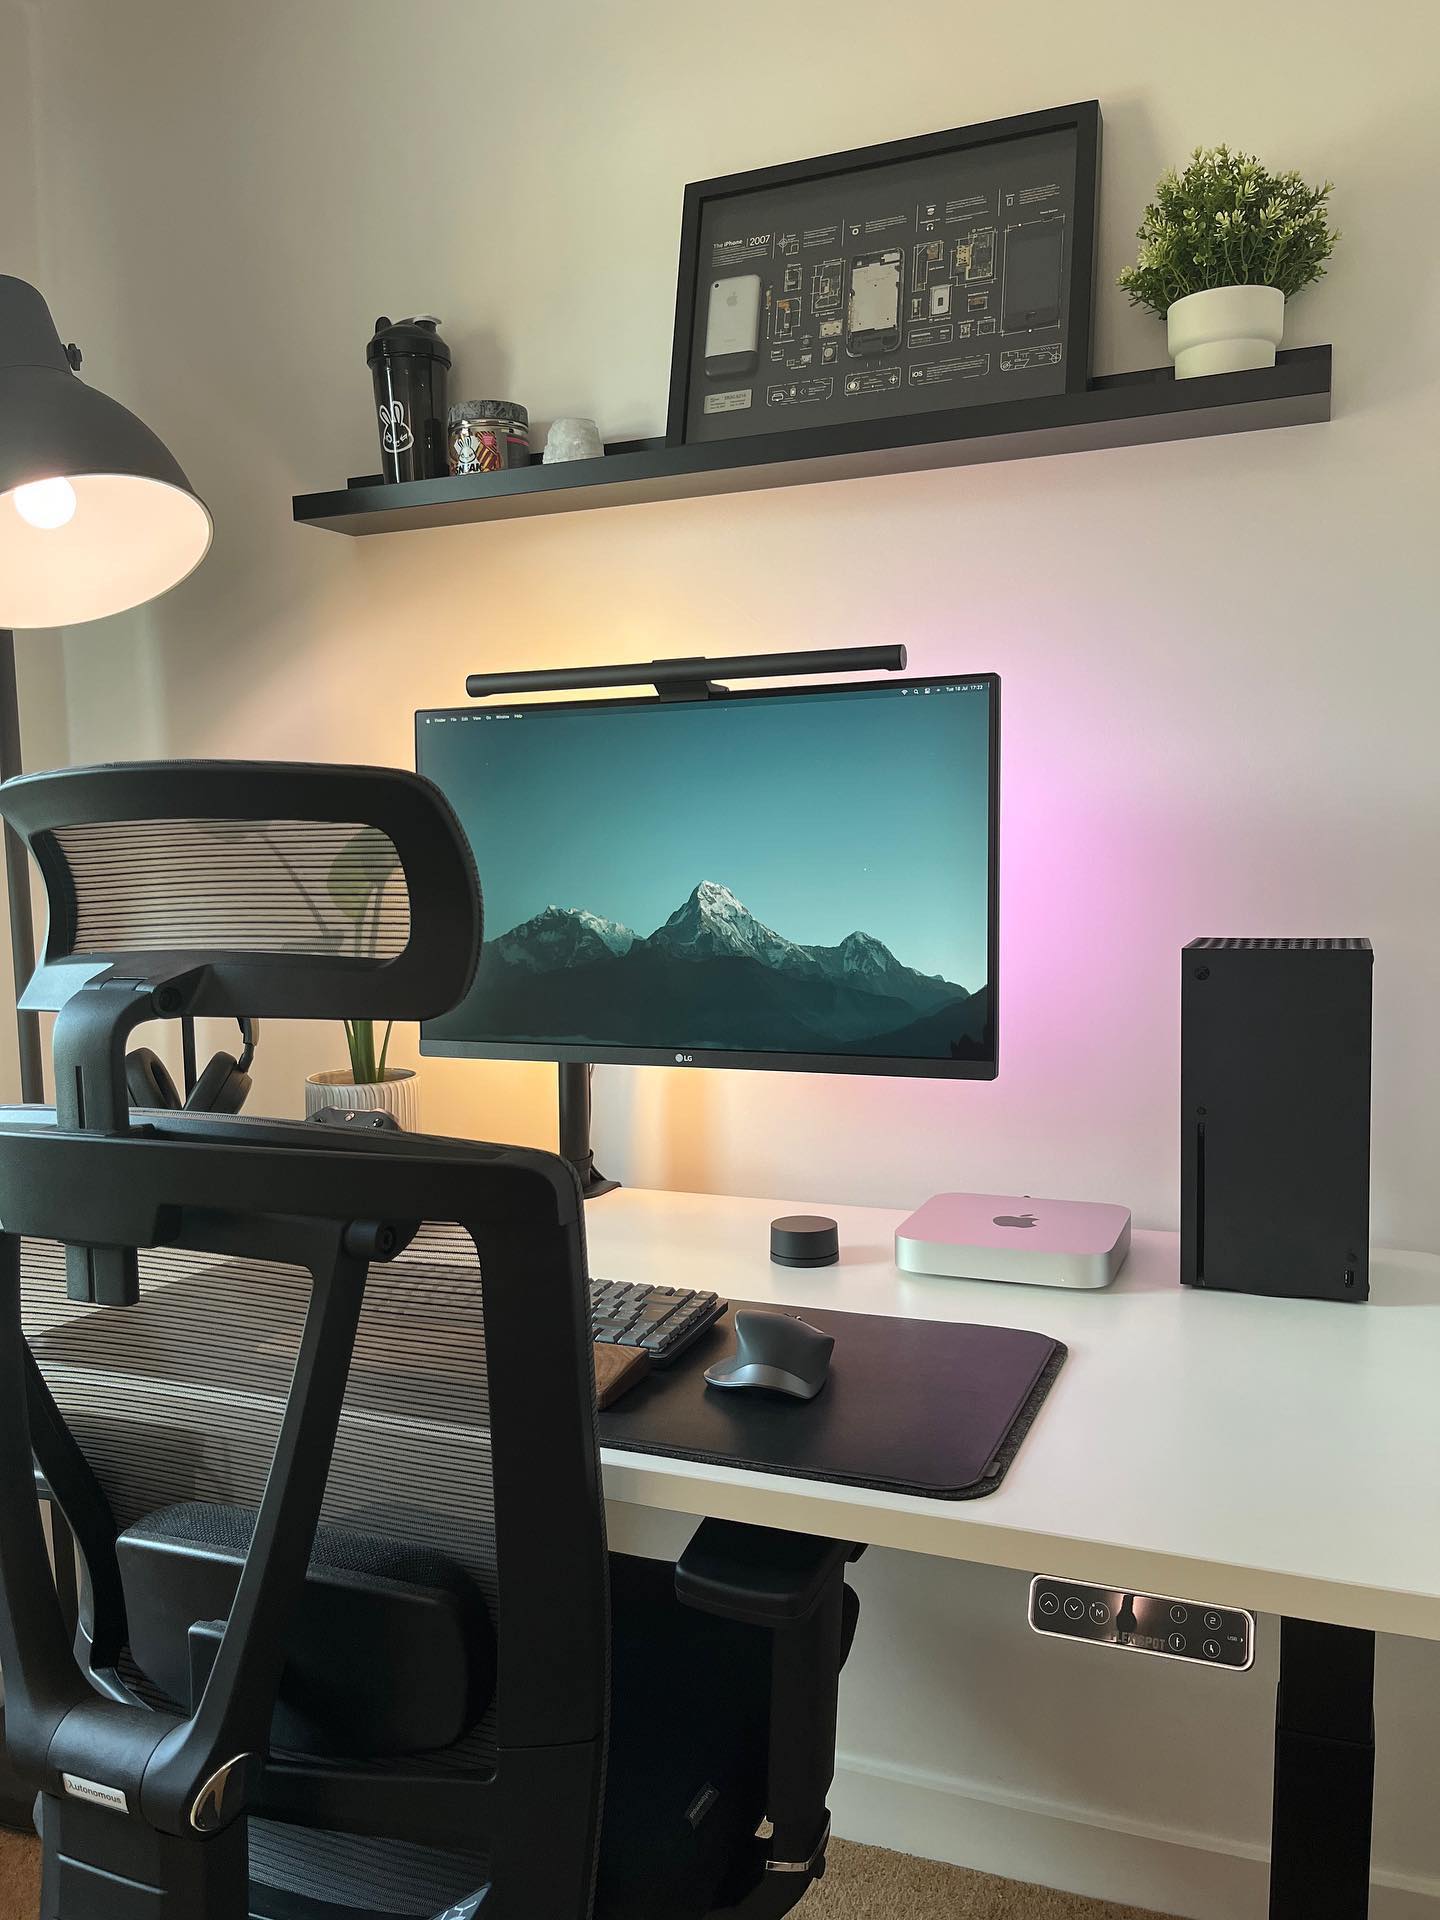 Minimal Desk Setup 2020 - VIV & TIM